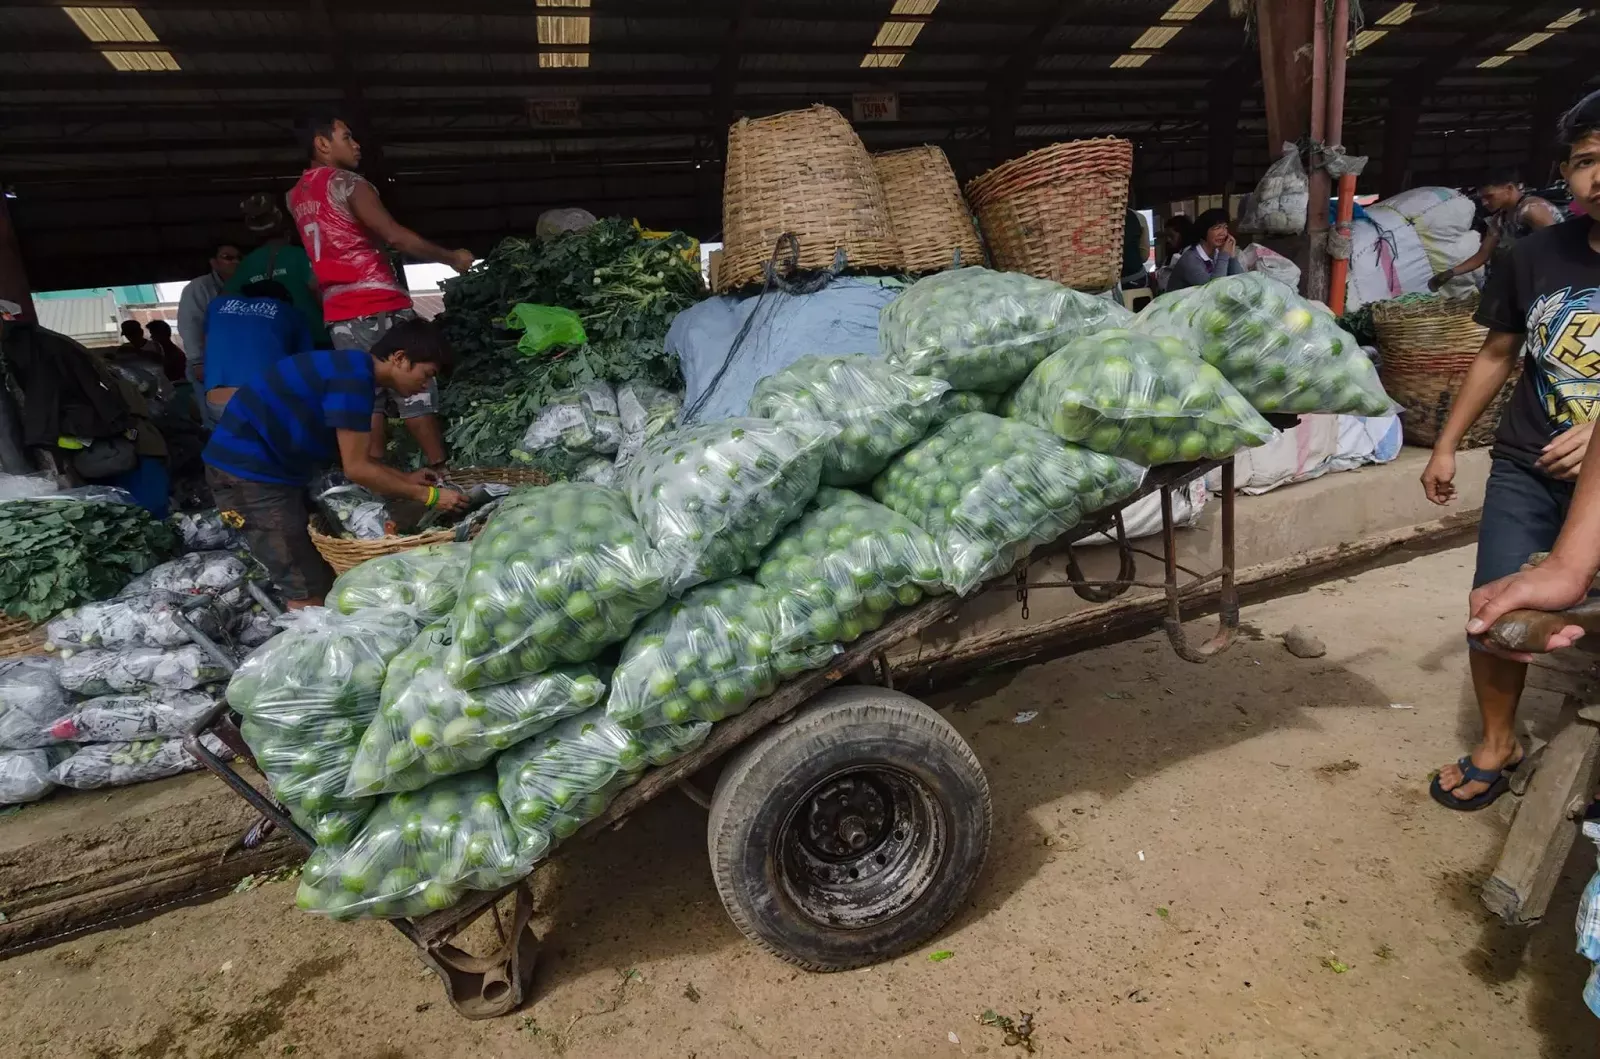 A Modern Porter's Cart Lemon Produce Trading Post La Trinidad Benguet Cordillera Administrative Region Philippines